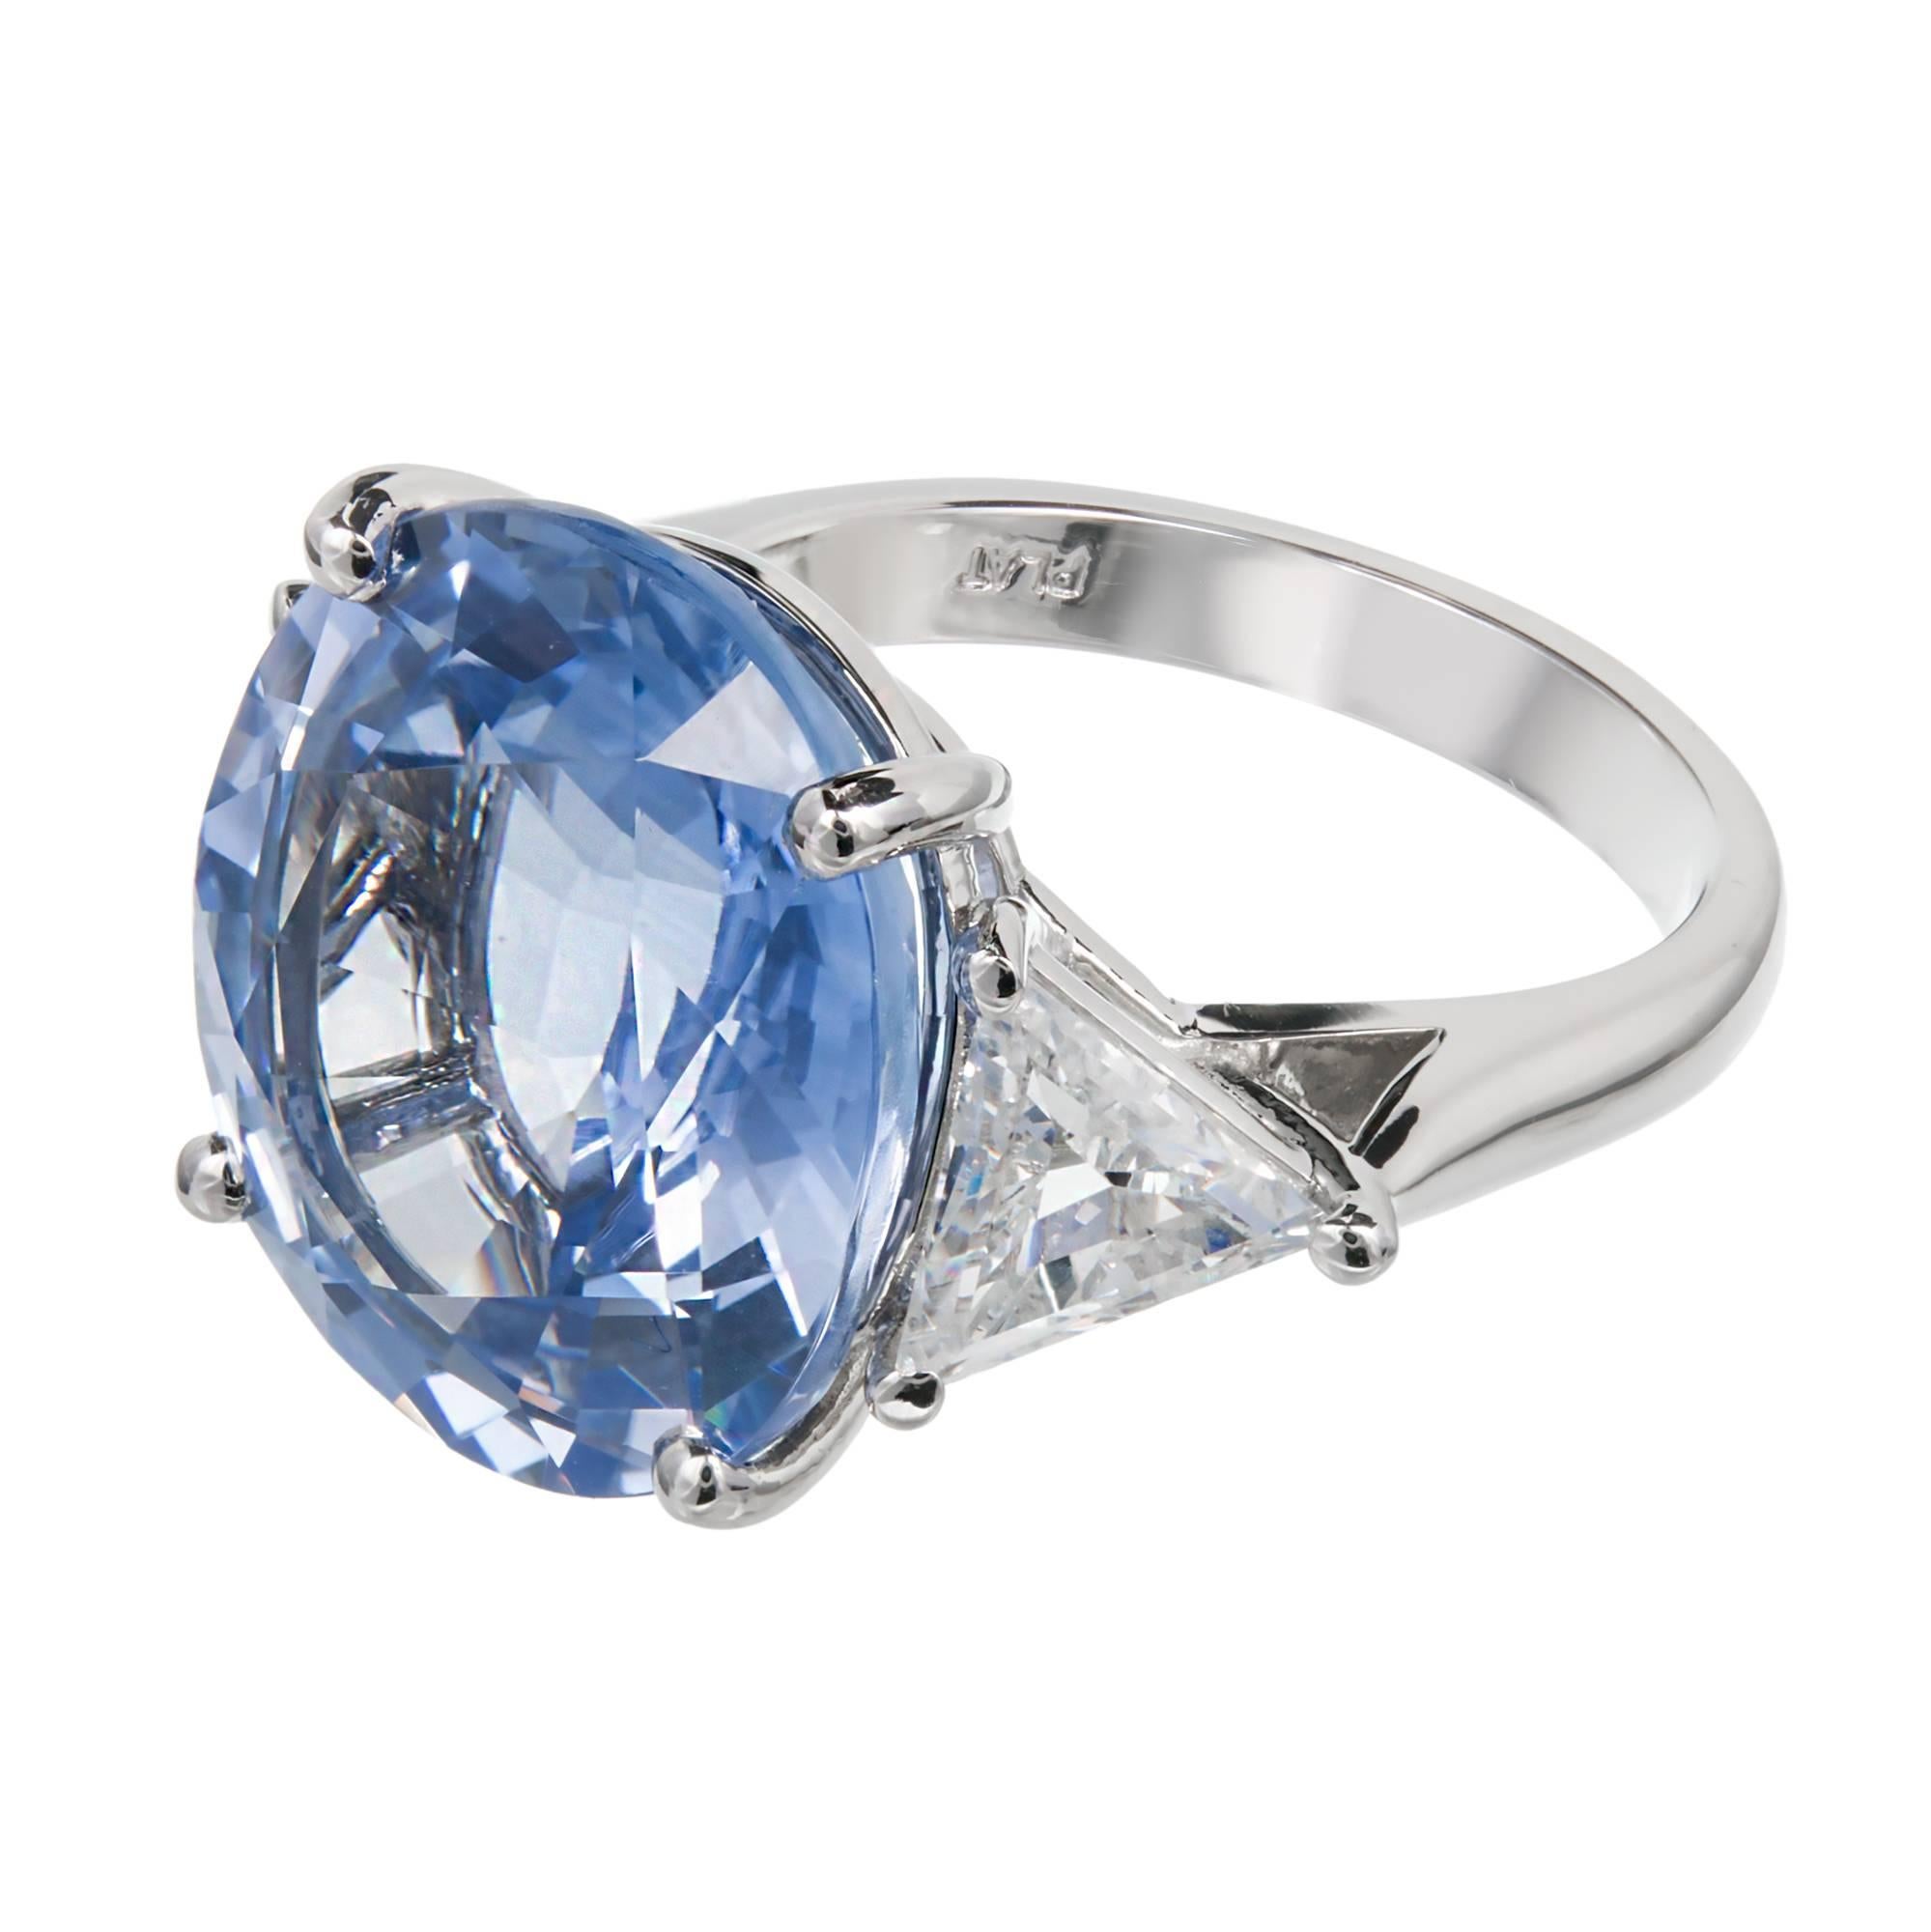 Oval Cut Peter Suchy 15.45 Carat Oval Ceylon Sapphire Diamond Platinum Engagement Ring 